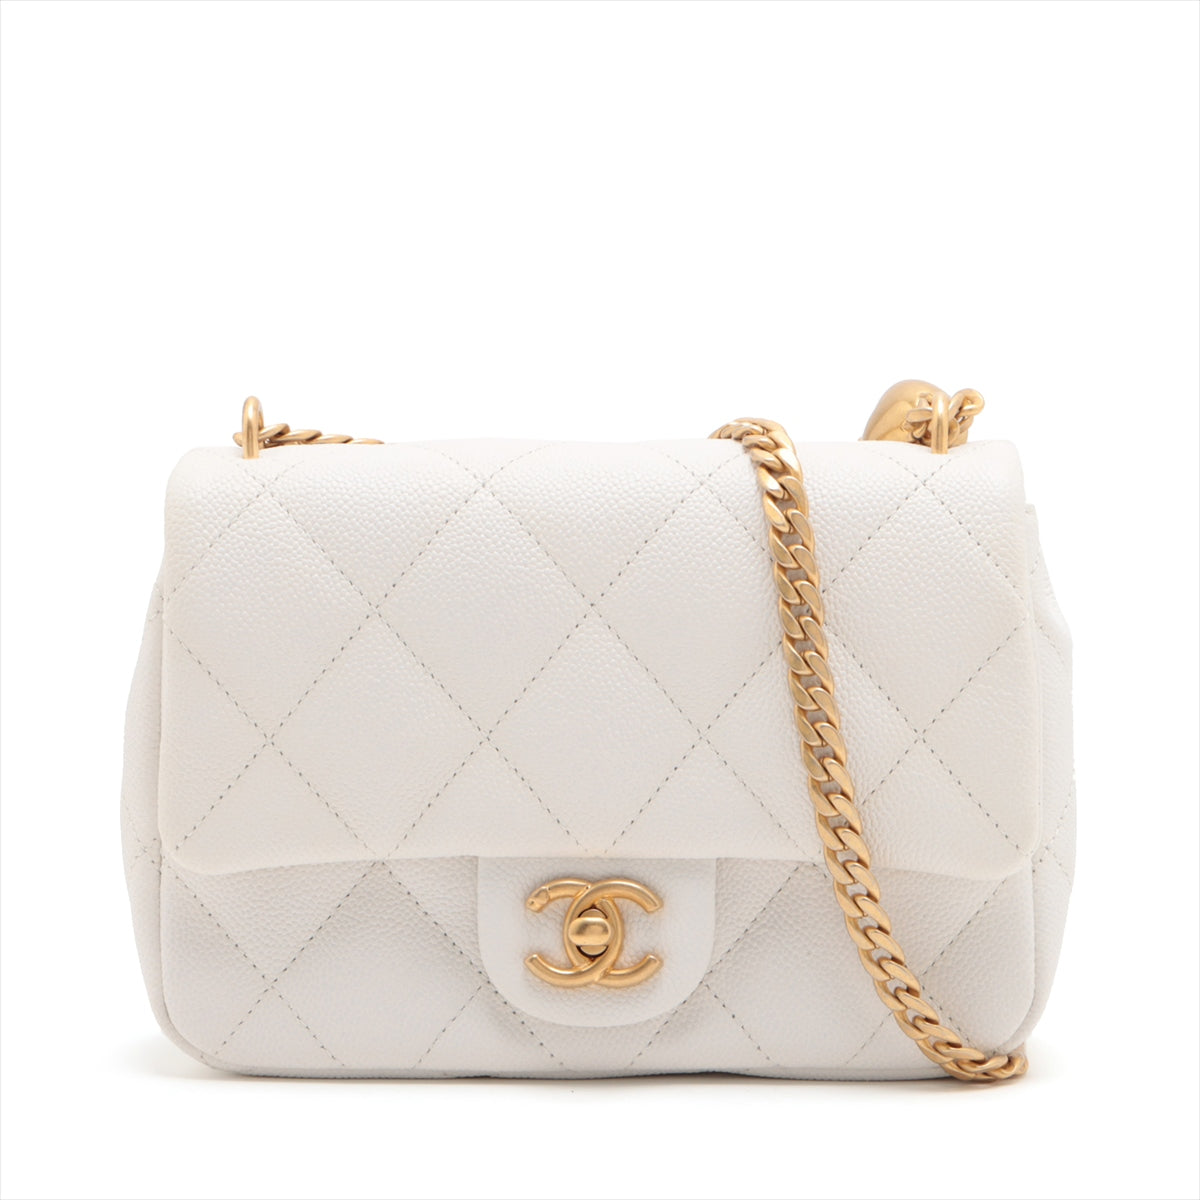 Chanel Mini Matelasse Caviarskin Chain shoulder bag White Champagne gold hardware